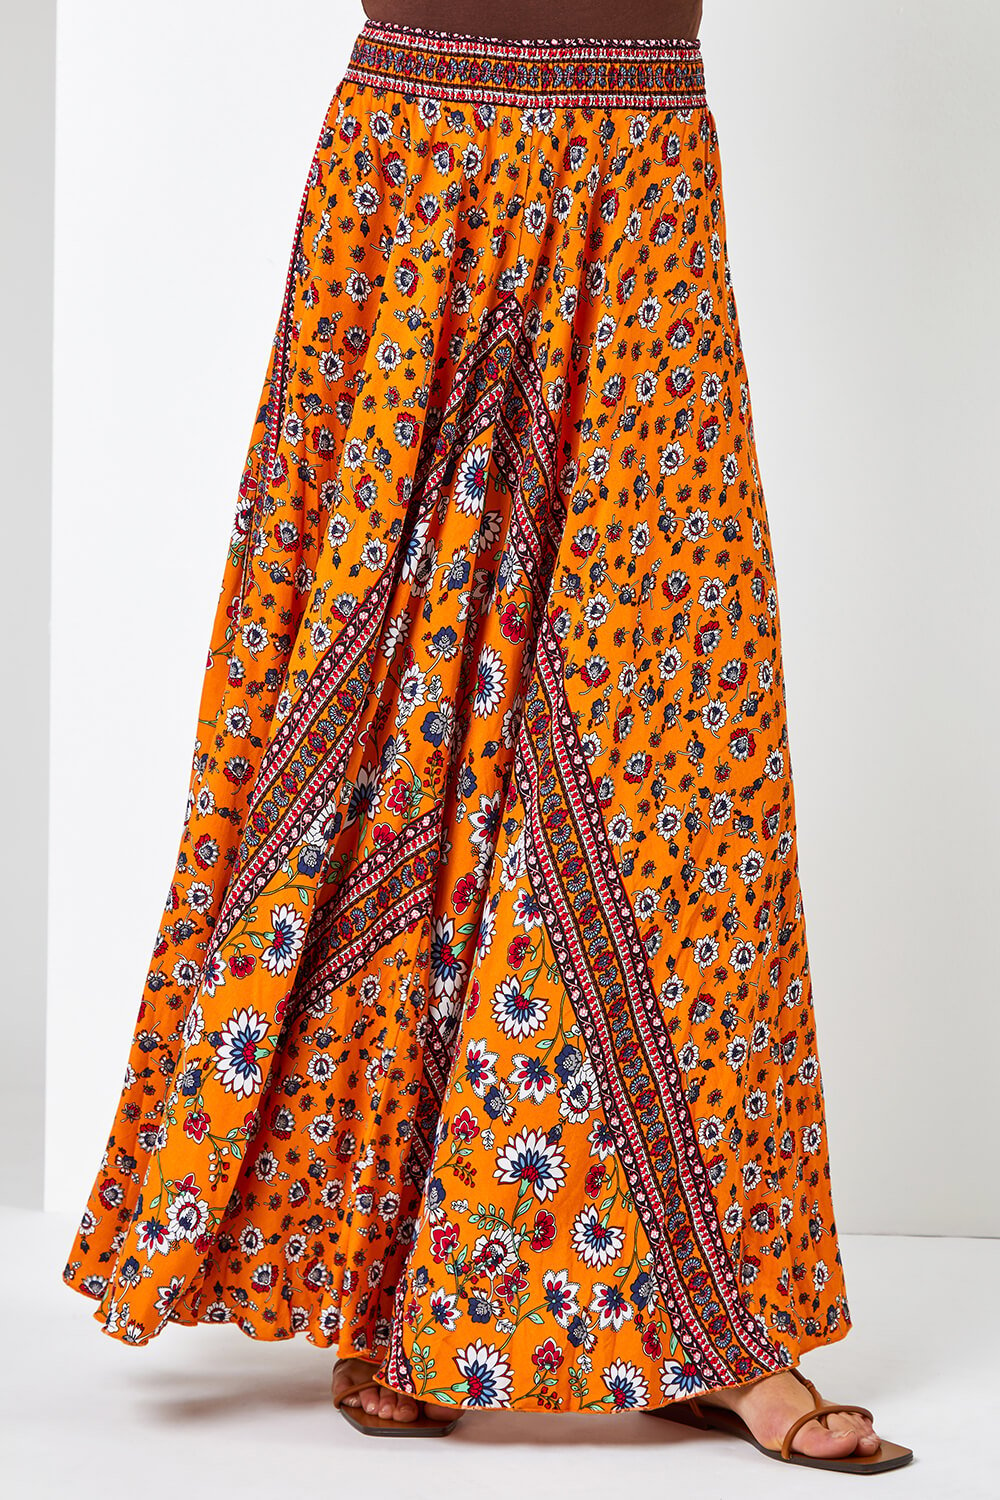 ORANGE Boho Floral Print Maxi Skirt, Image 2 of 5